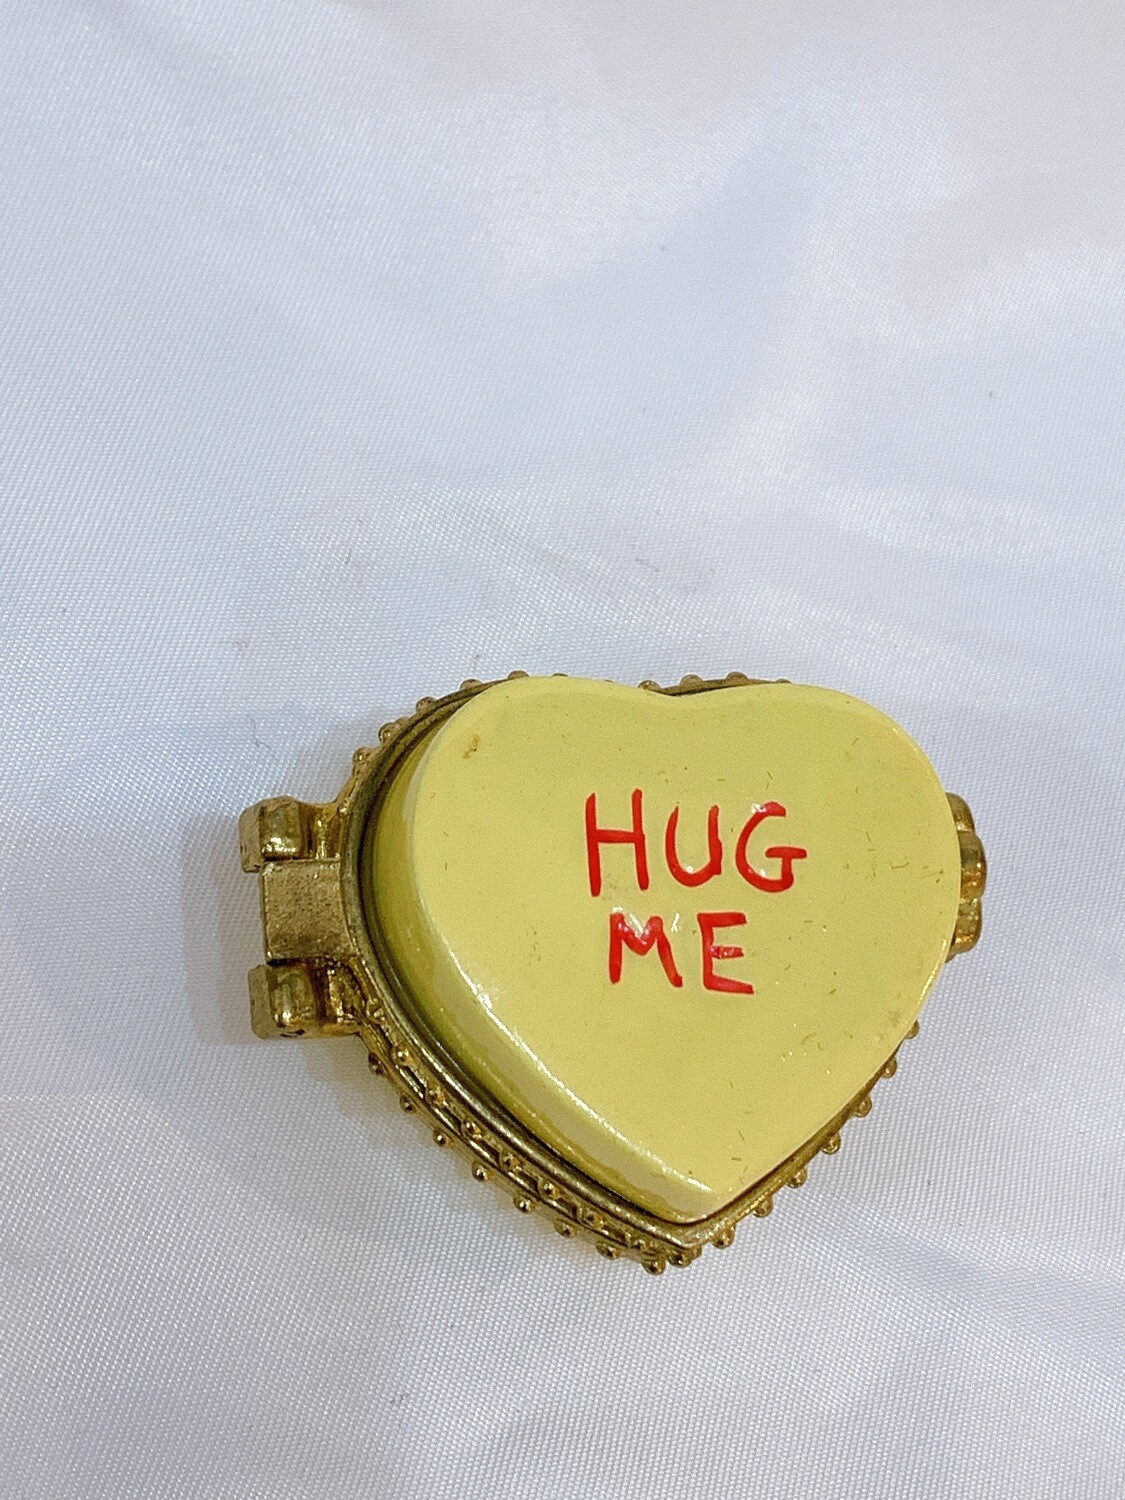 Hug Me Trinket Box 2”wide